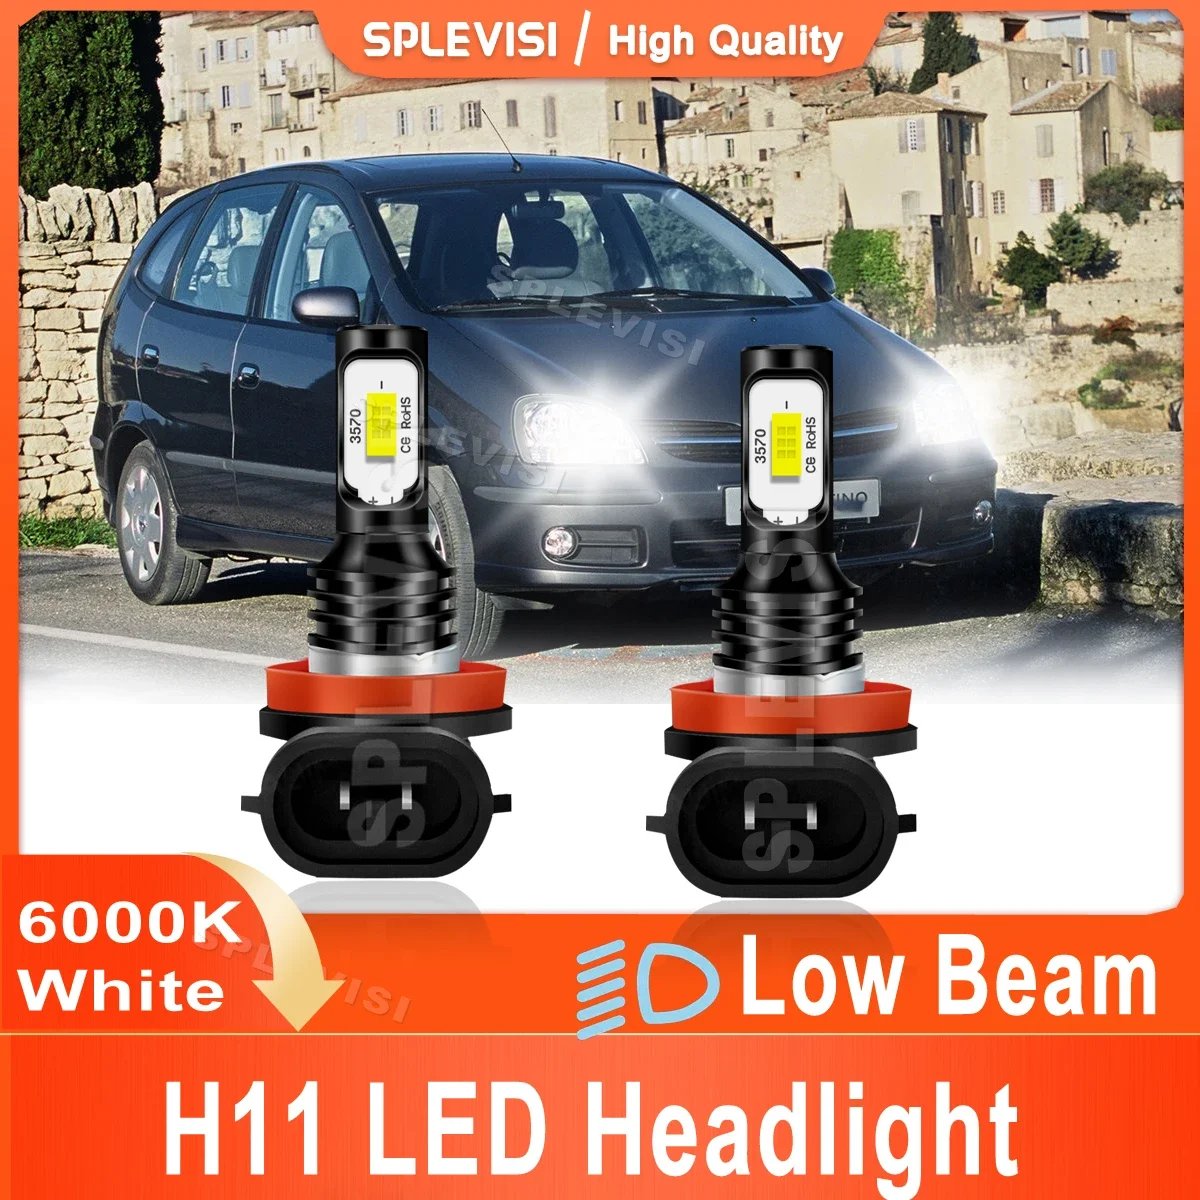 

SPLEVISI Led Headlight Low Beam H11 XID White 70W 8000LM Fit For Isuzu D-Max MK2 2012 2013 2014 2015 2016 2017 2018 Car Light